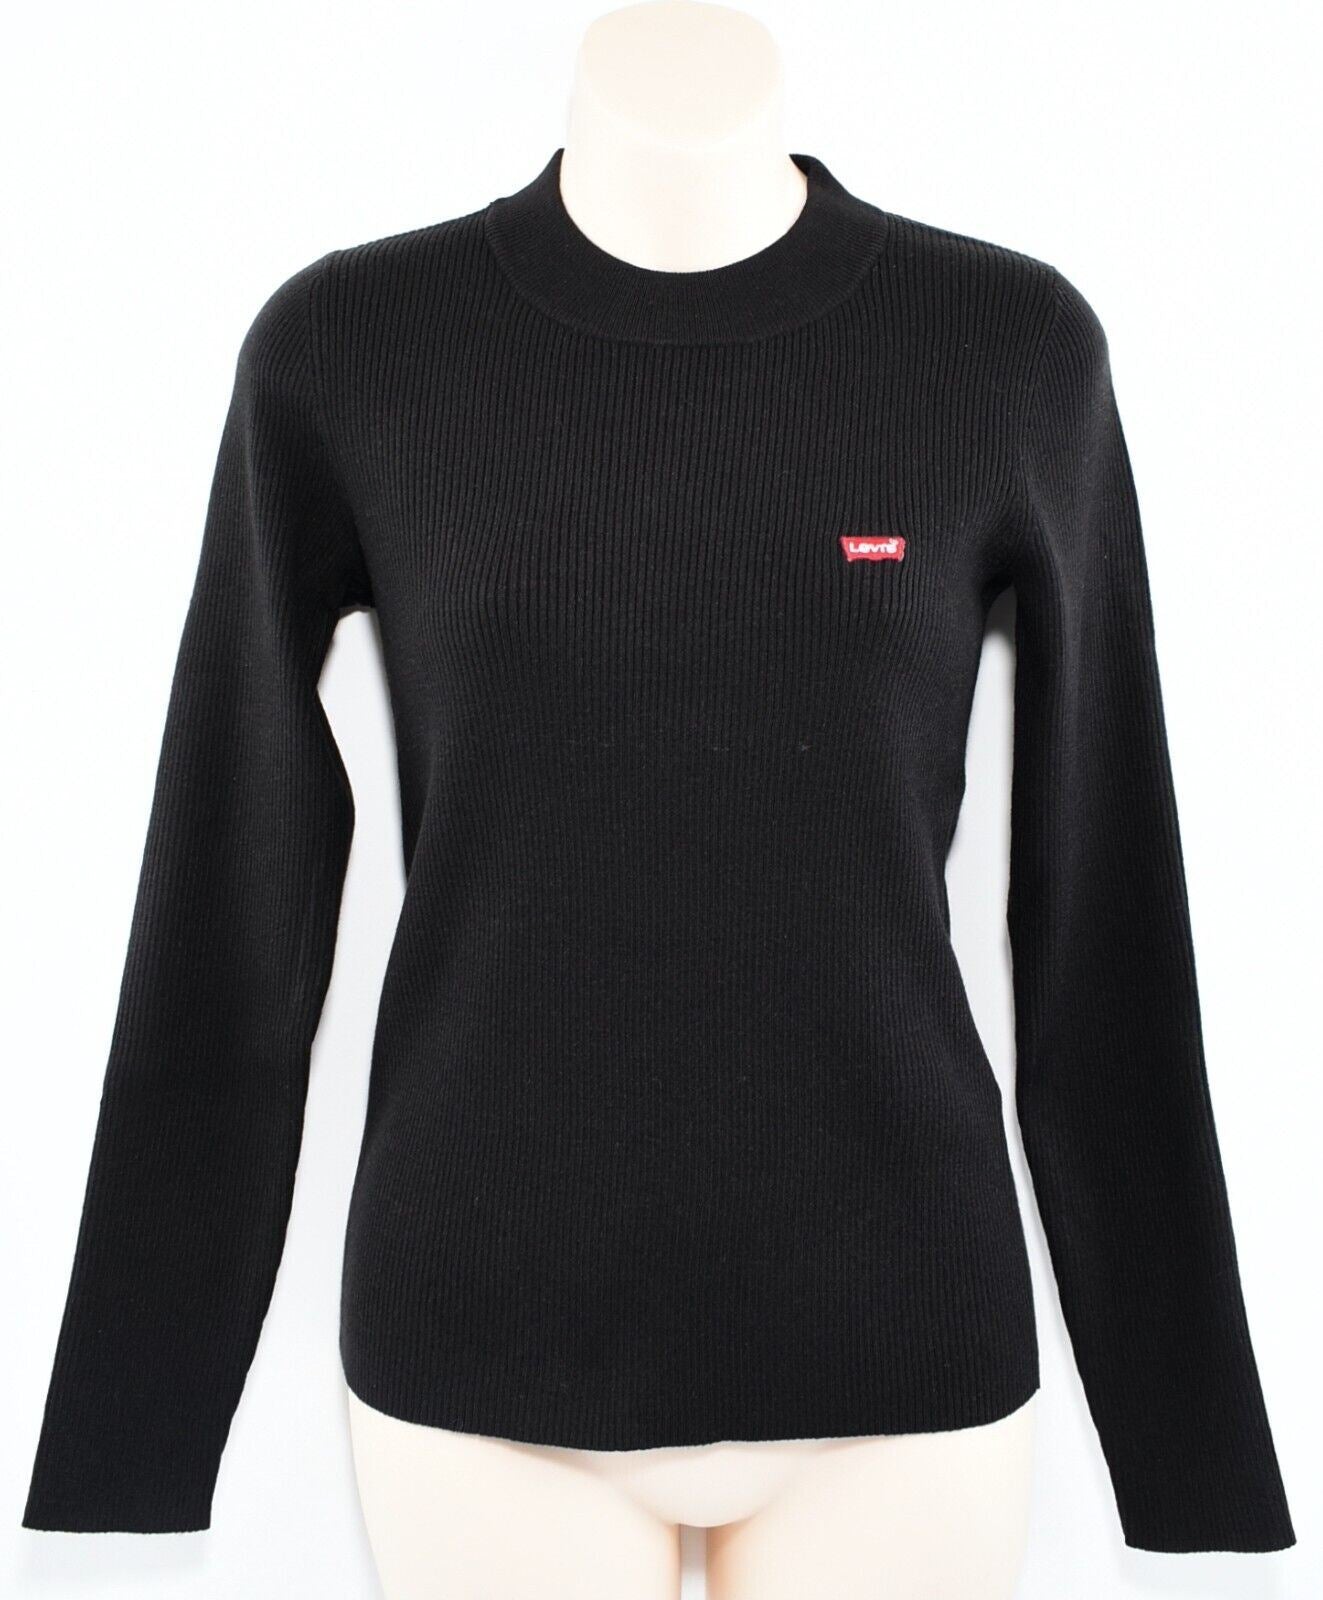 LEVI'S Women's Rib Knit Jumper /Sweater, Black, size L (UK 14)